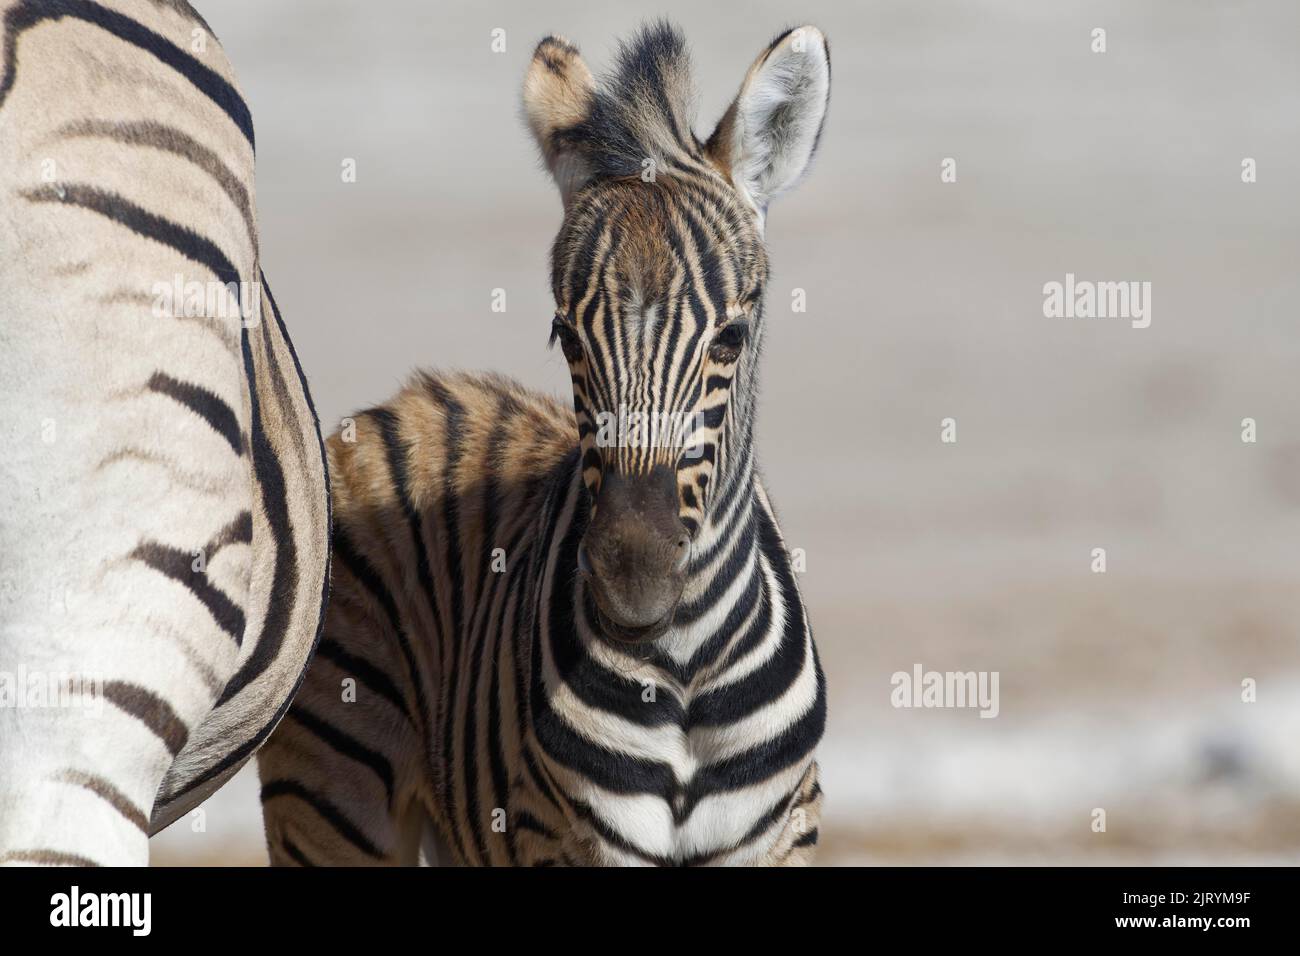 Burchells Zebras (Equus quagga burchellii), Erwachsenen- und Zebrafohlen, Tierporträt, Etosha-Nationalpark, Namibia, Afrika Stockfoto